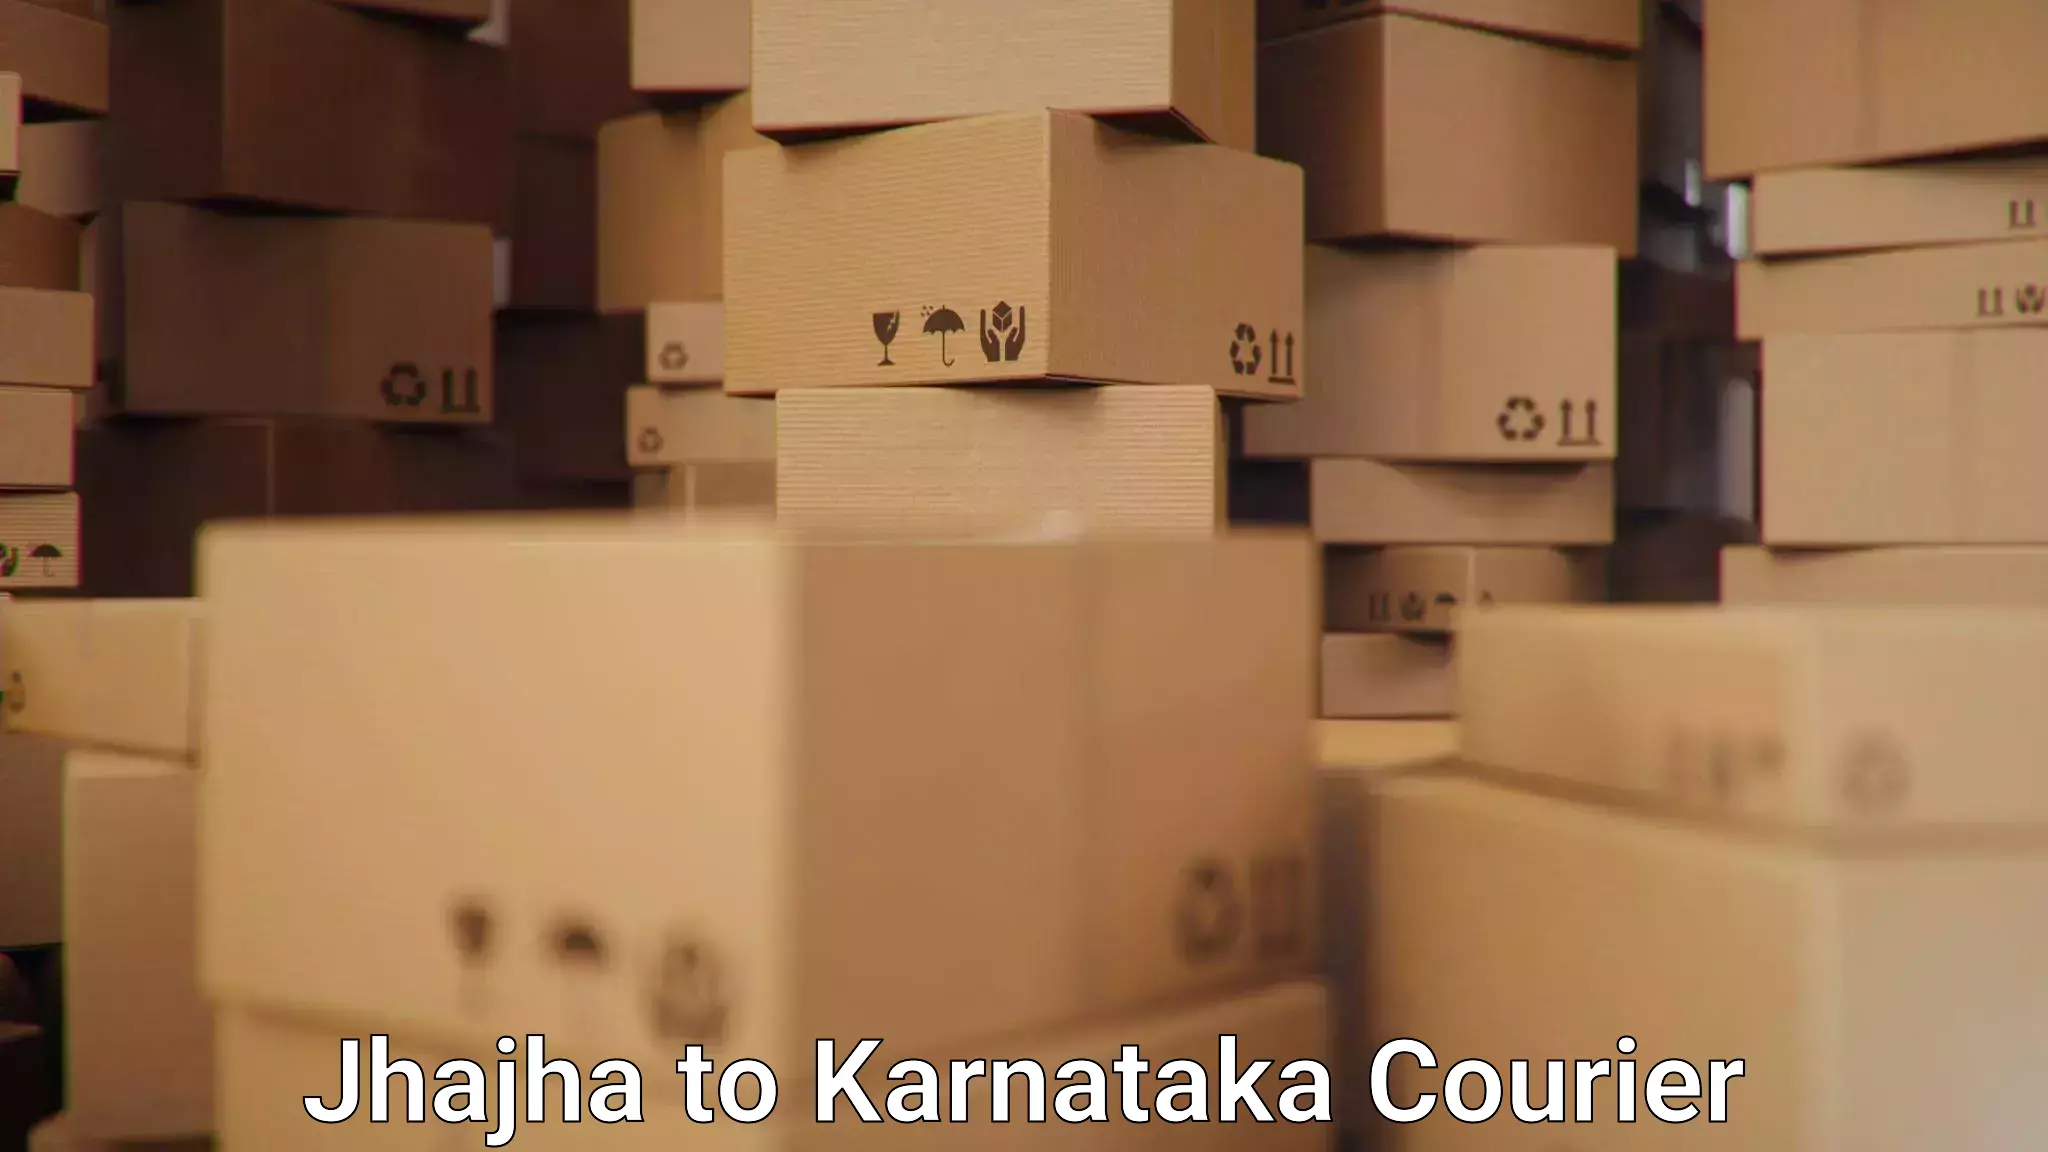 Shipping and handling in Jhajha to Karnataka